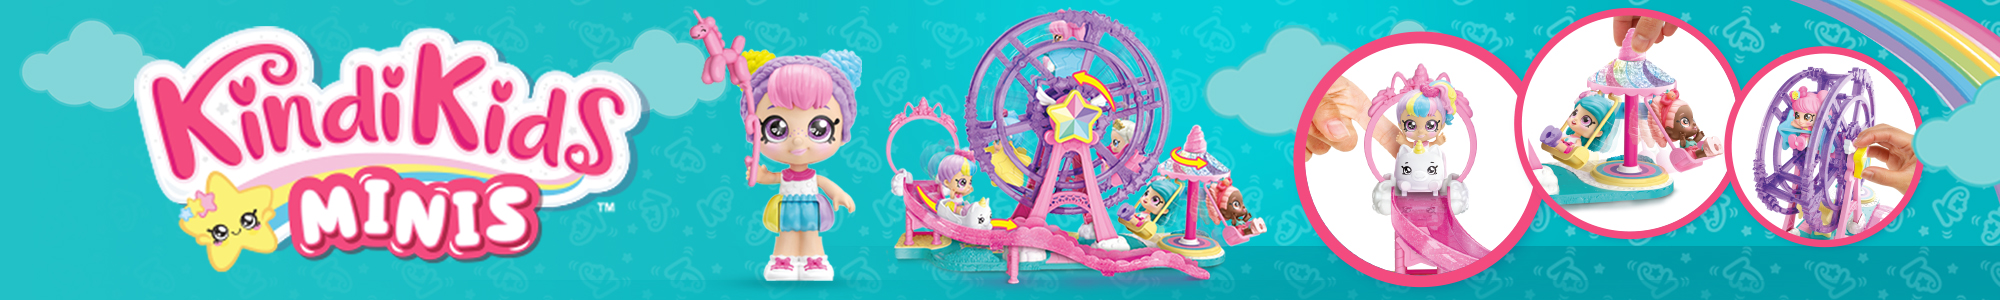 Kindi Kids Carnival Playset_entertainer assetsKindi Kids Bubble Doll_Product page top banner  2000x300px.jpg